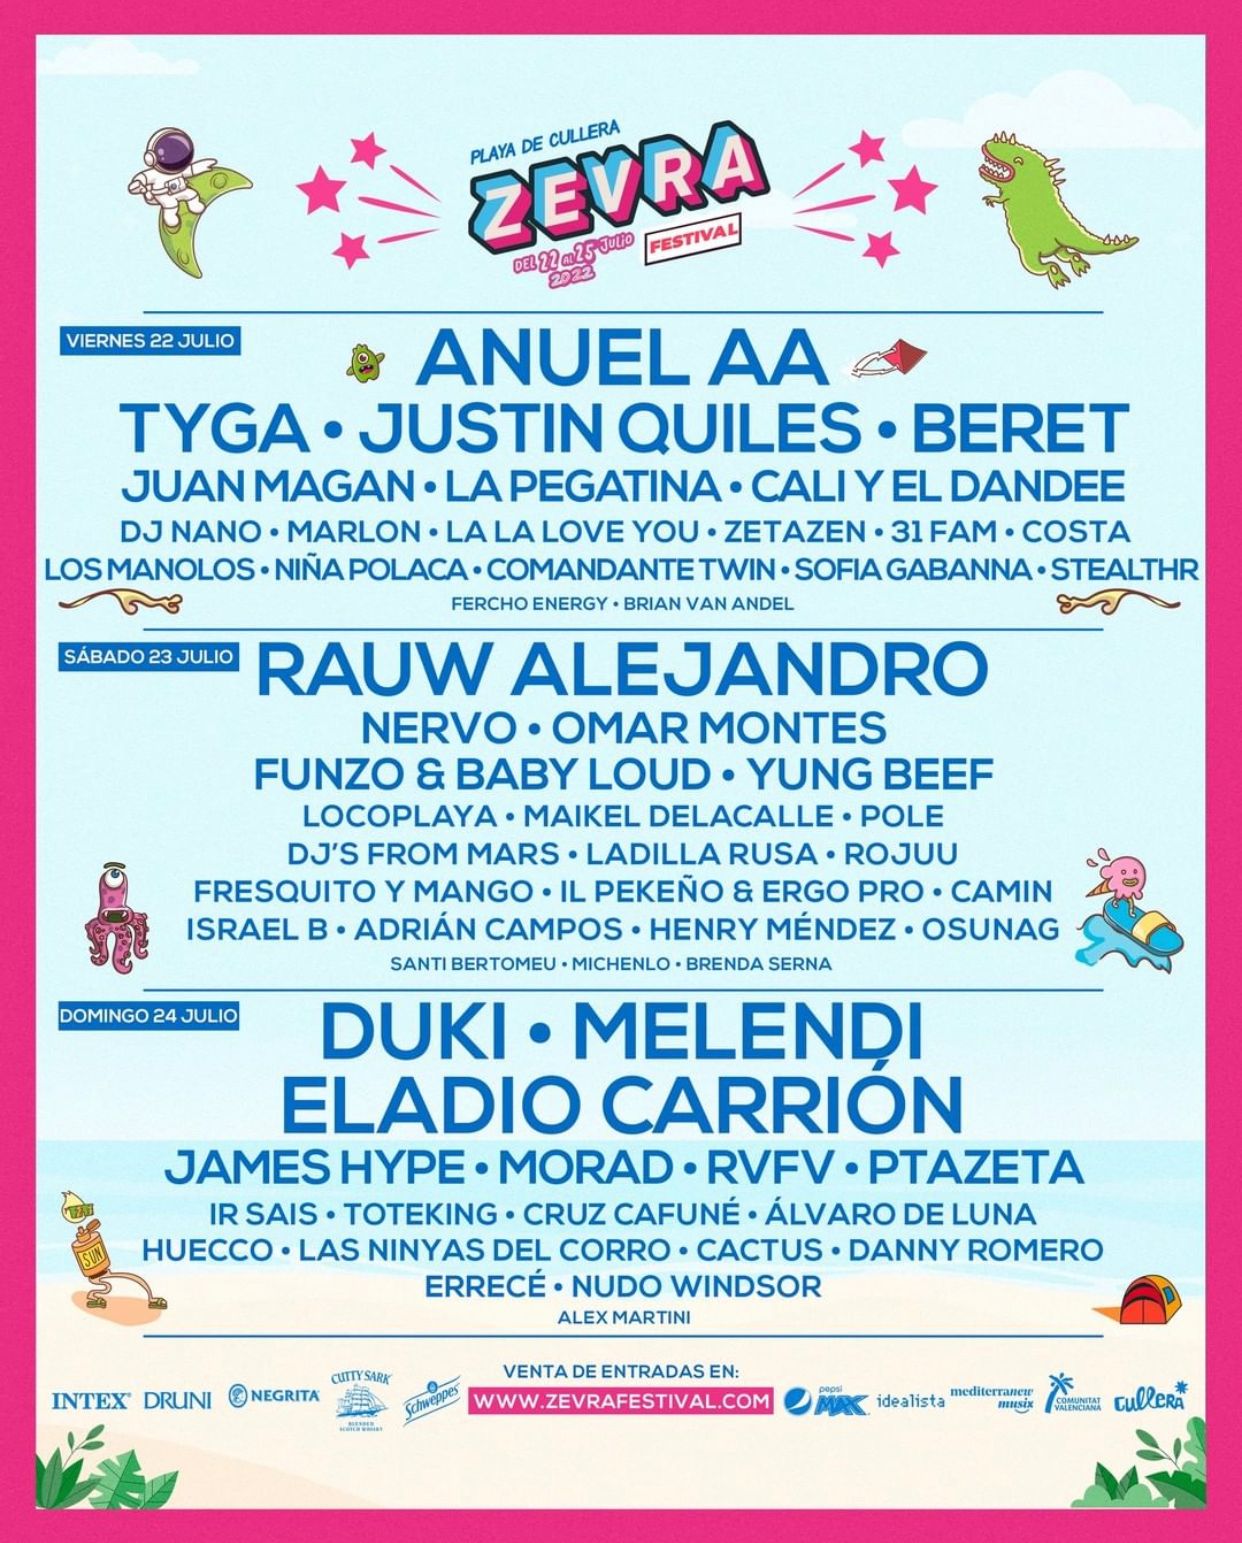 Cartel oficial del Zevra Festival 2022.